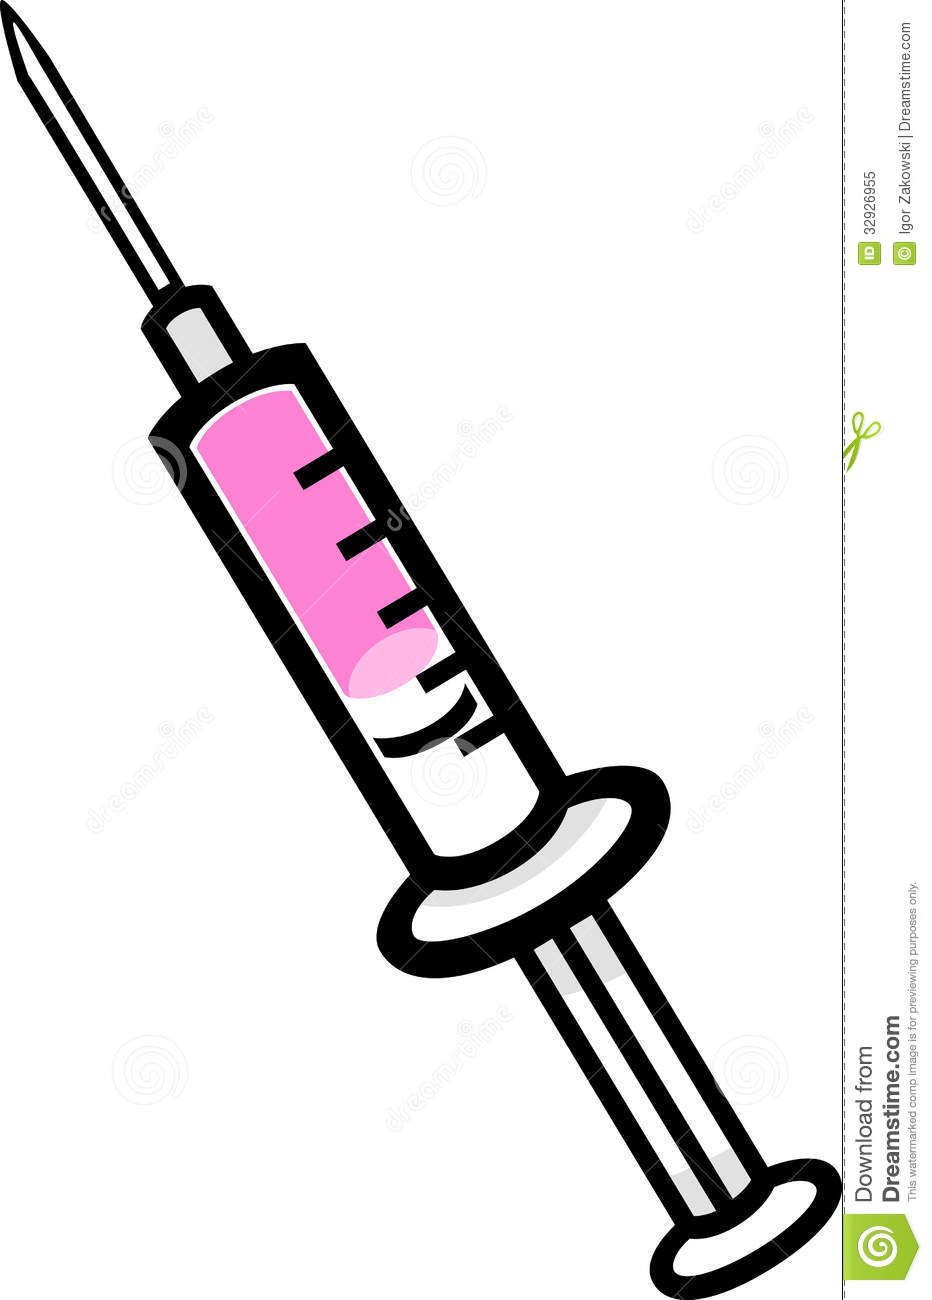 Syringe clip art cartoon illu - Syringe Clip Art